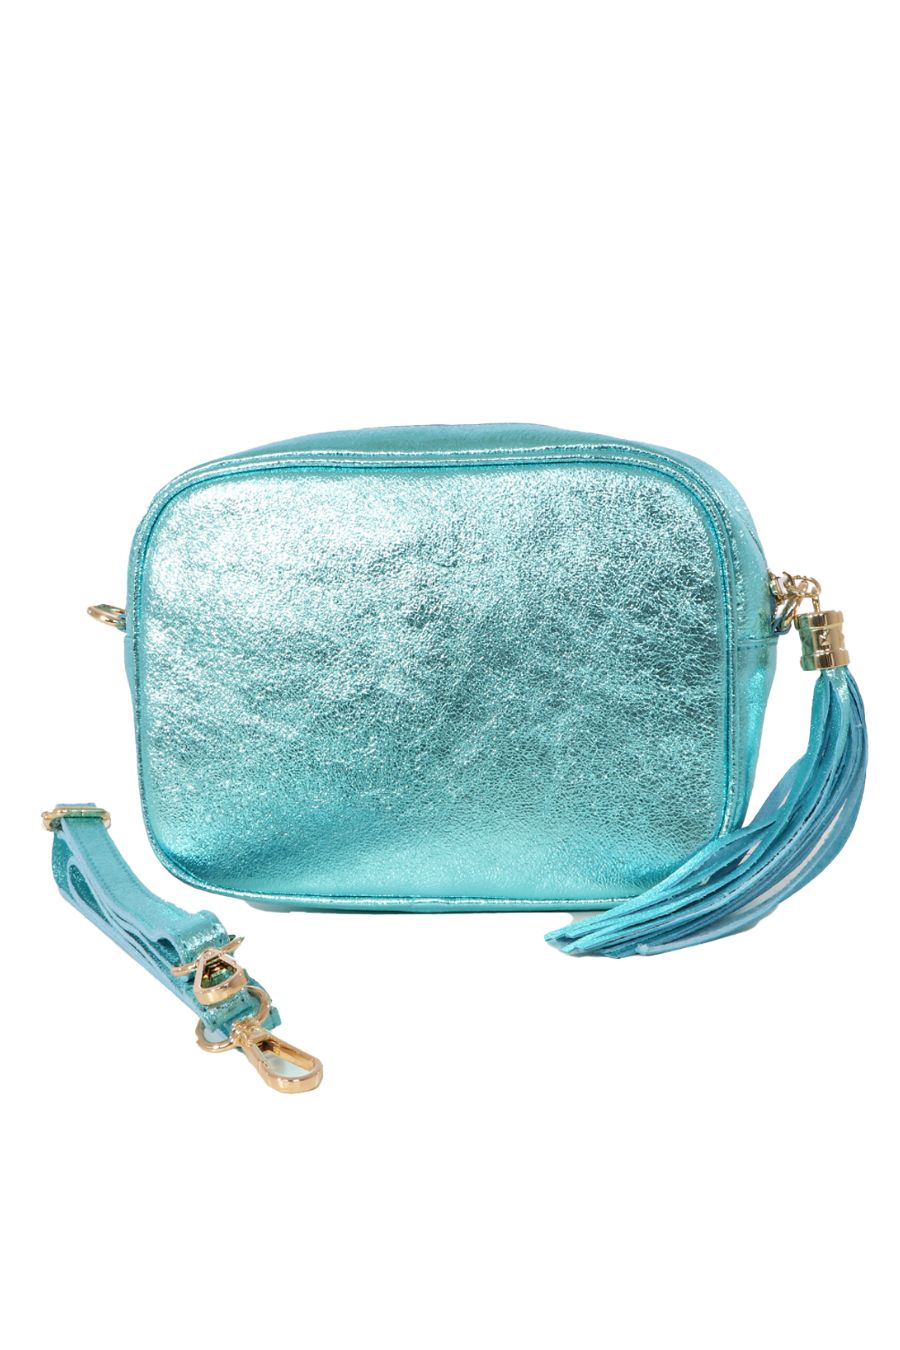 Aqua Genuine Italian Leather Camera Bag